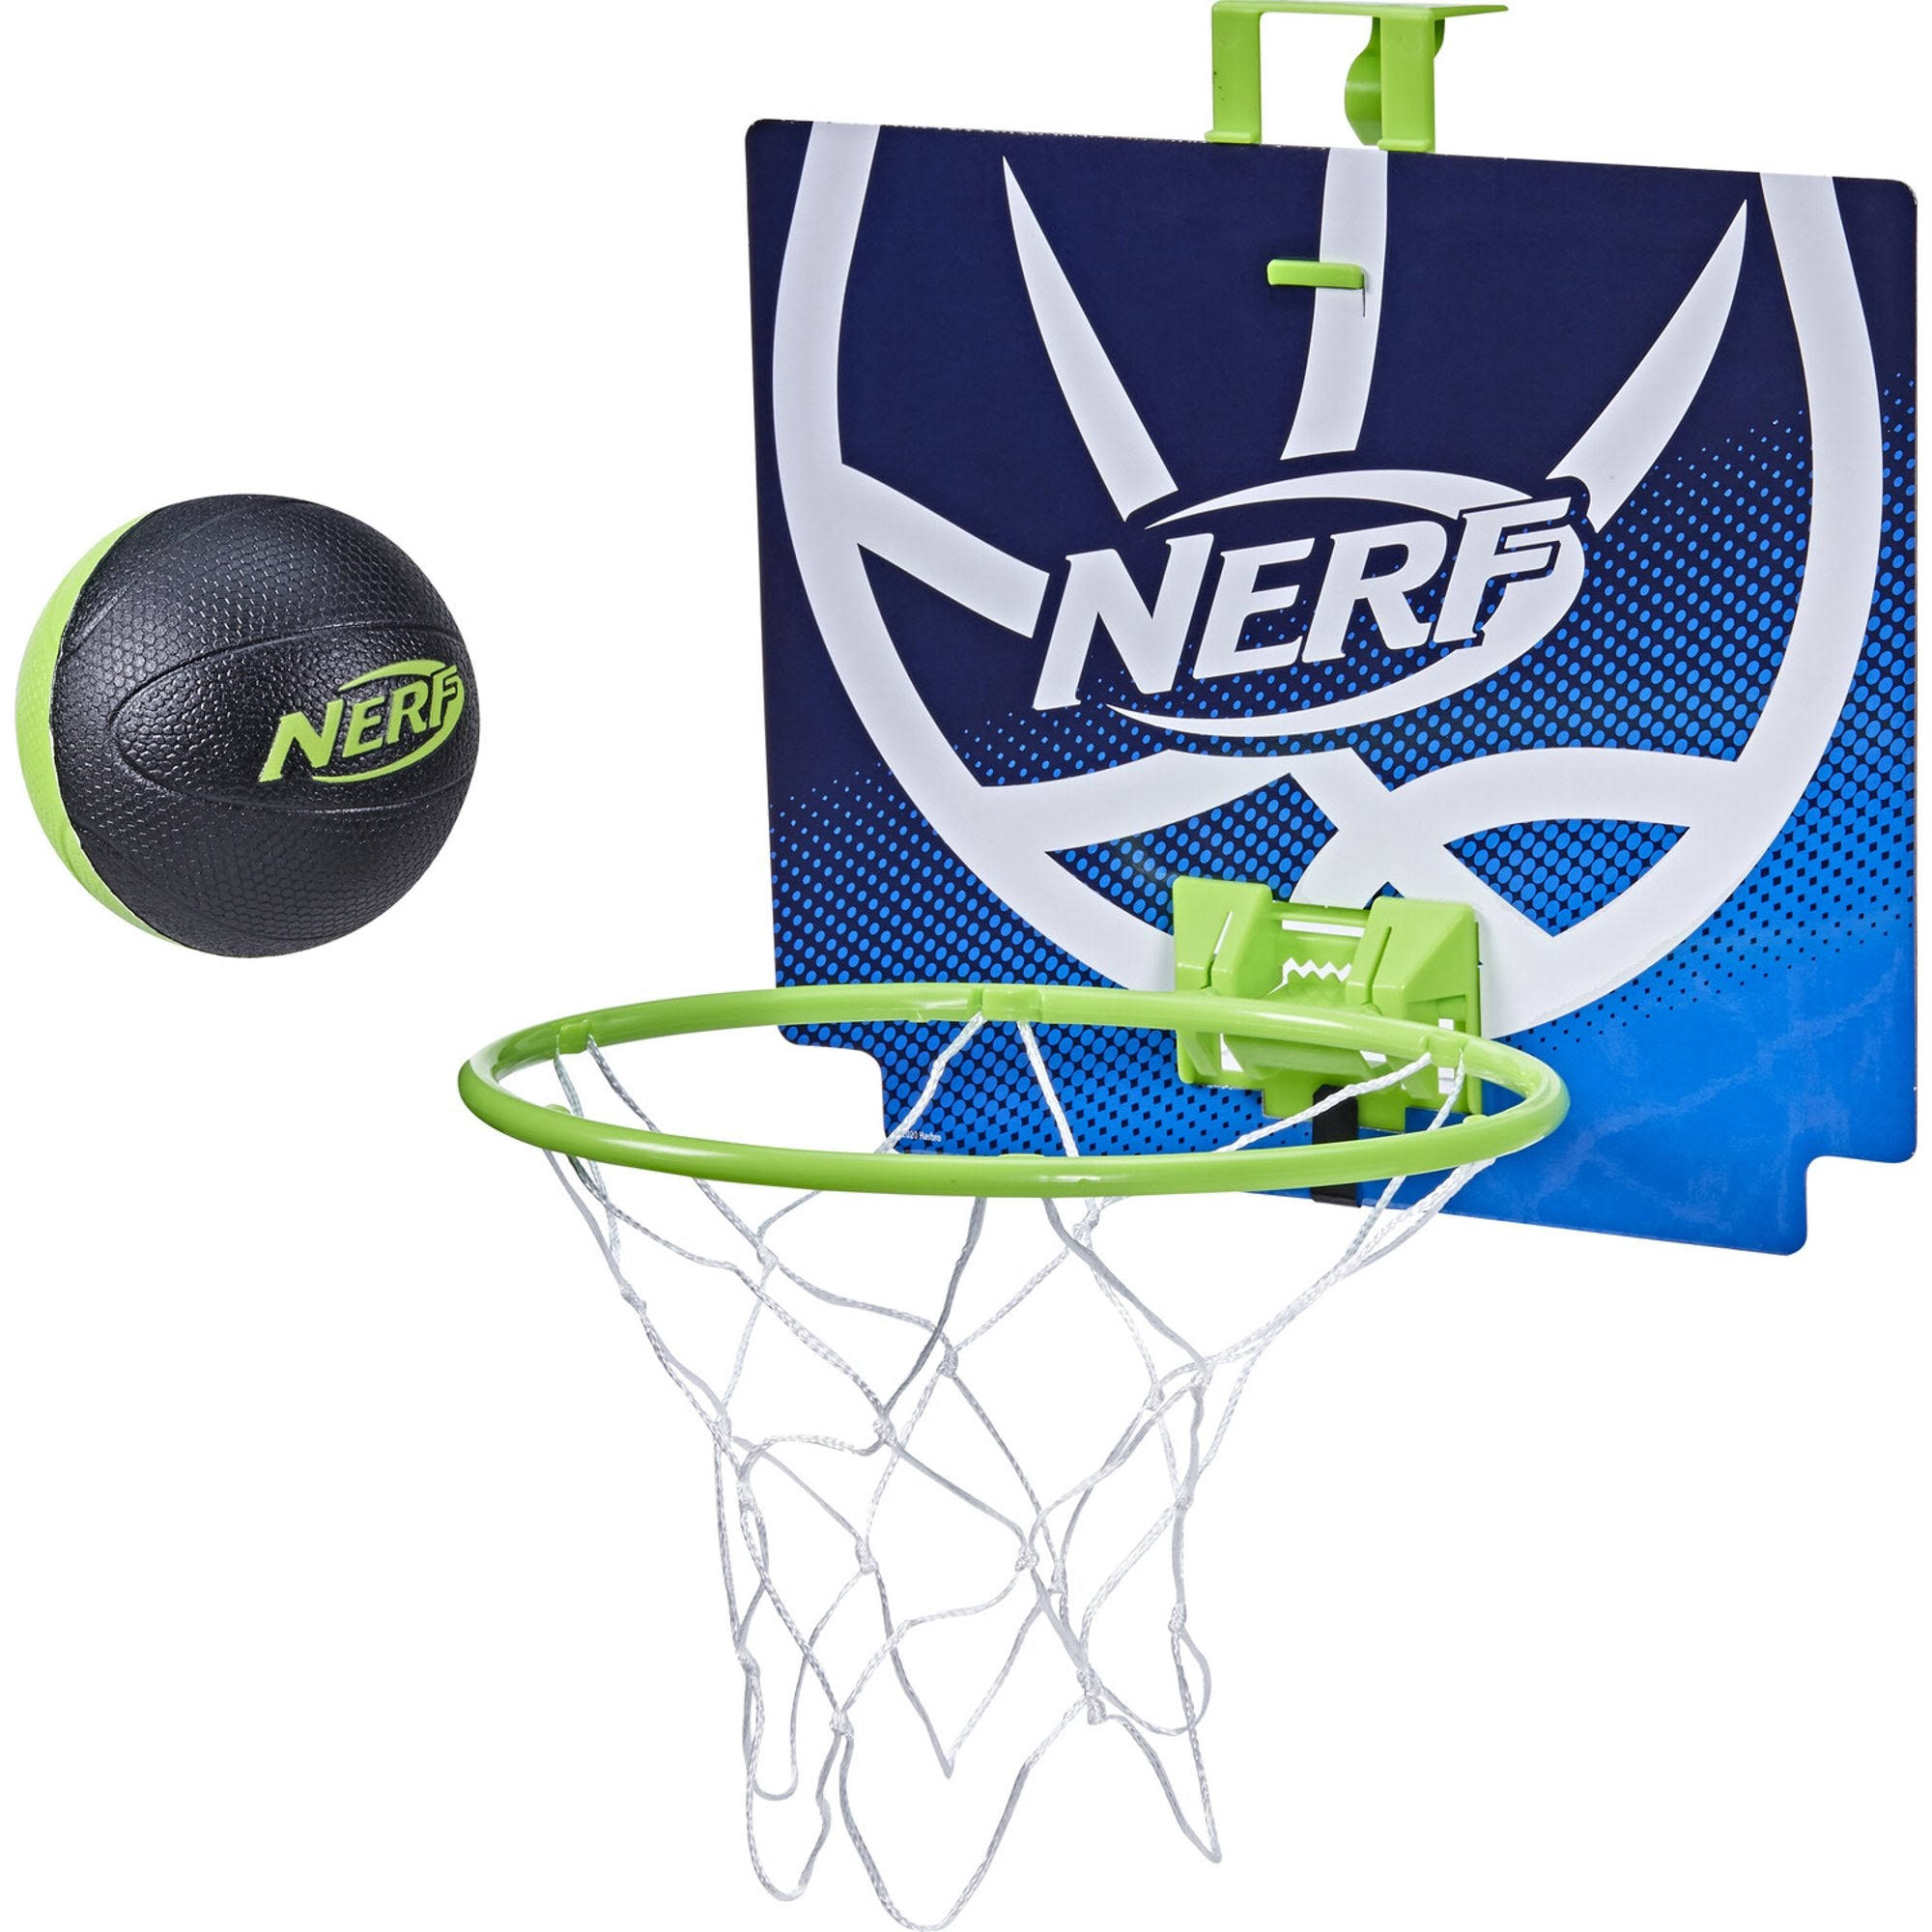 Nerf Nerfoop The Classic Mini Foam Basketball and Hoop Hooks On Doors